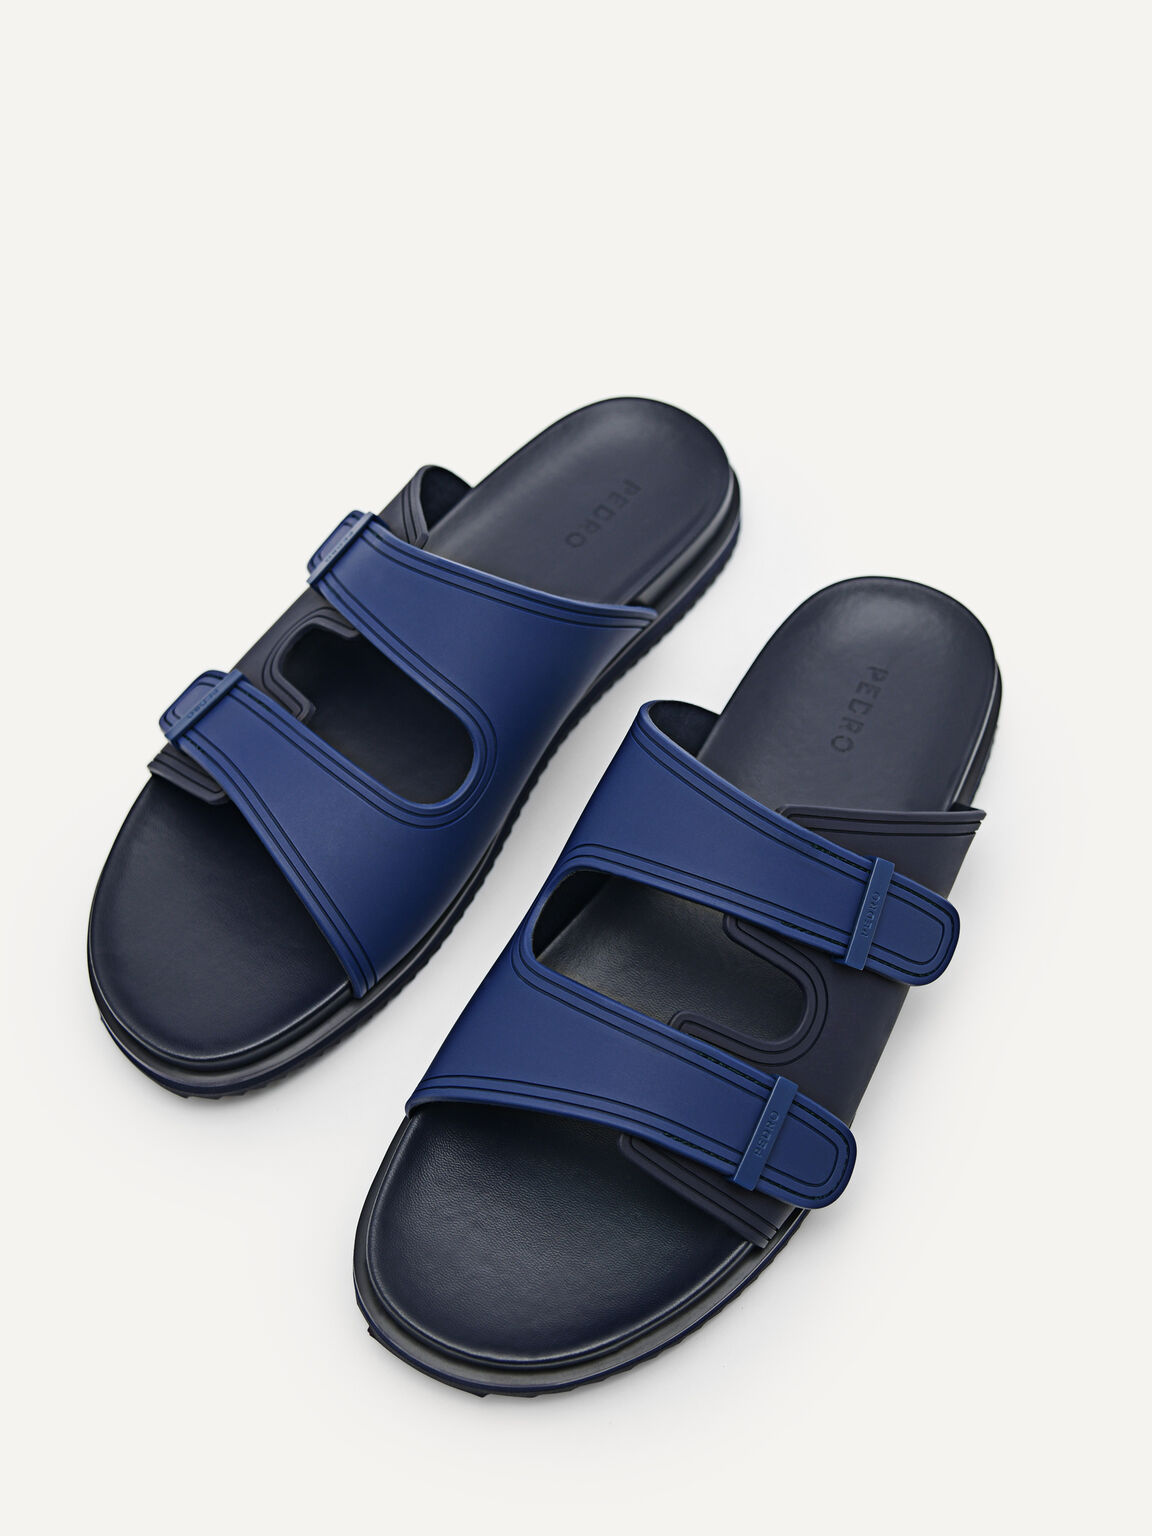 Rubber Double-strap Walking Sandals, Navy, hi-res